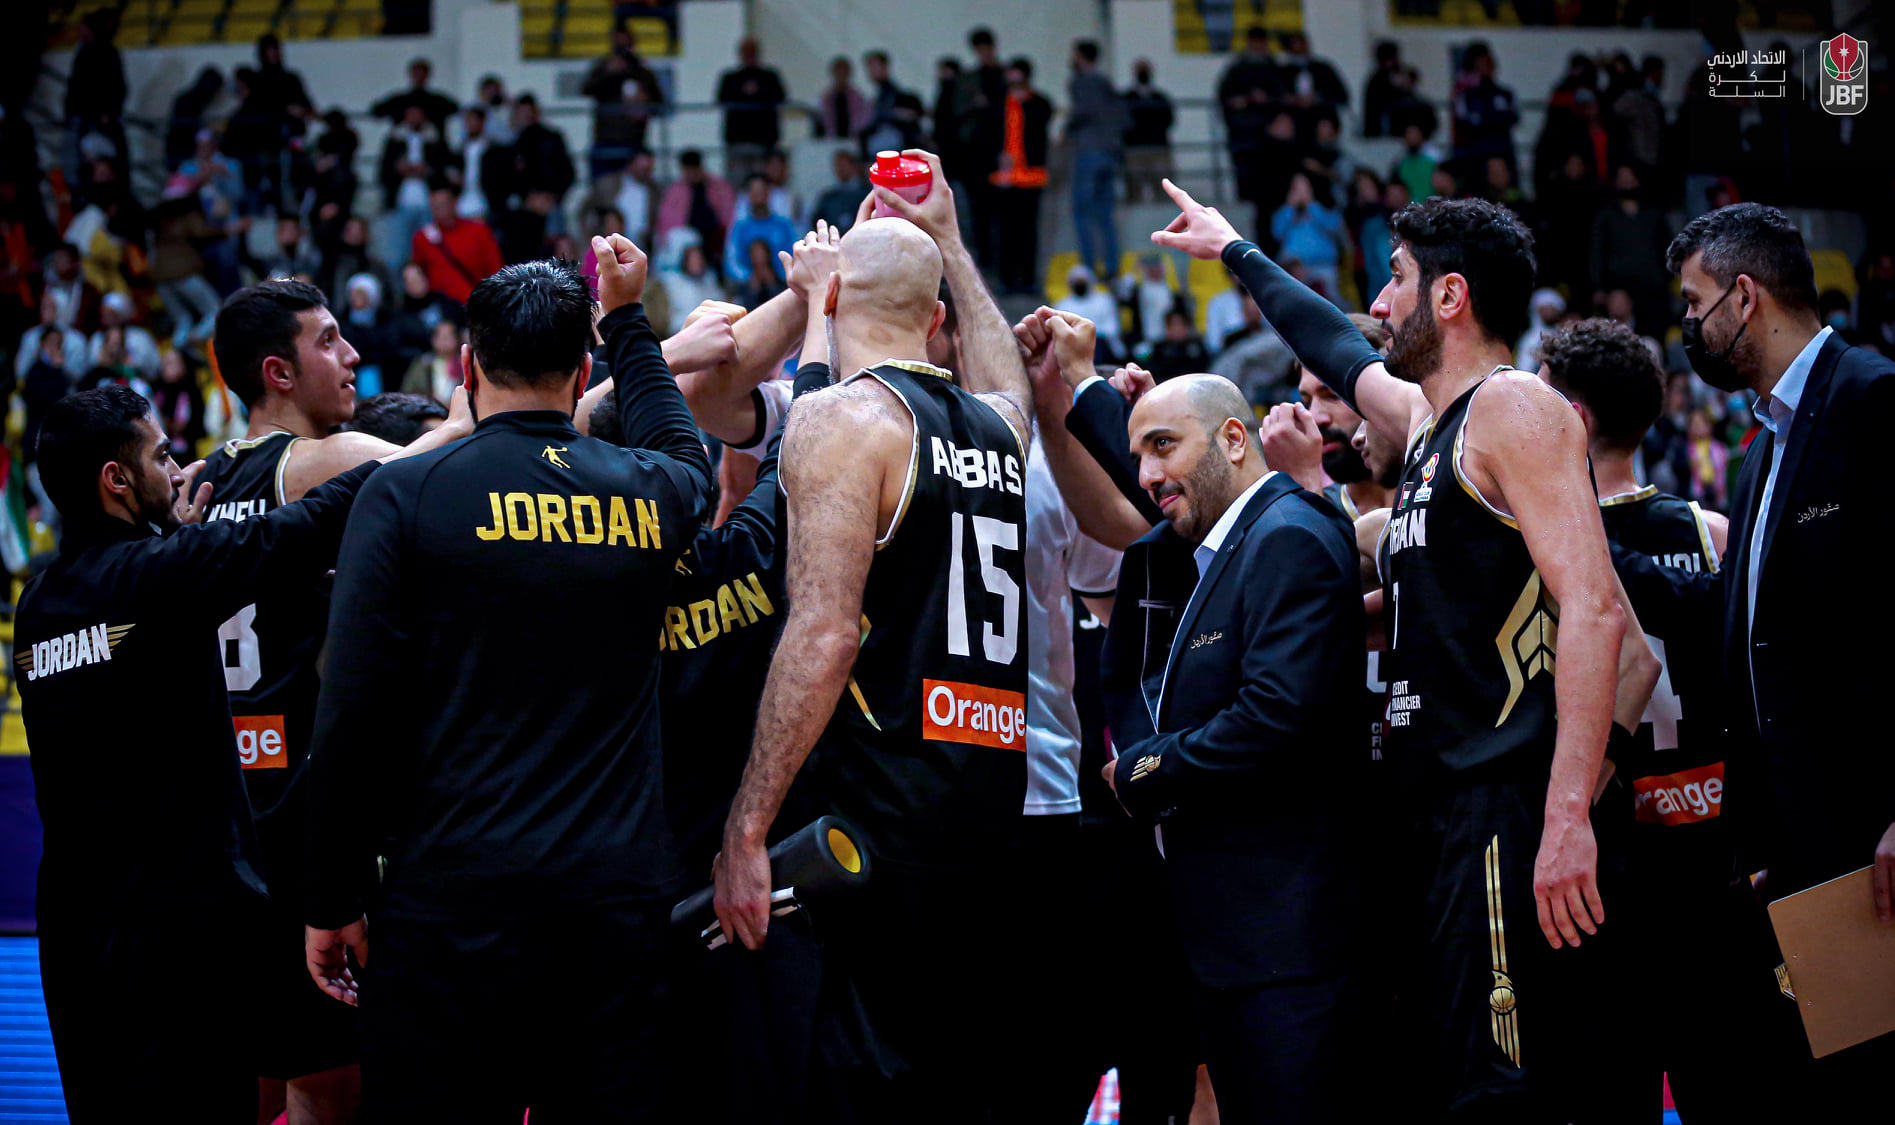 Jordan Falcons maintains its position in the FIBA rankings